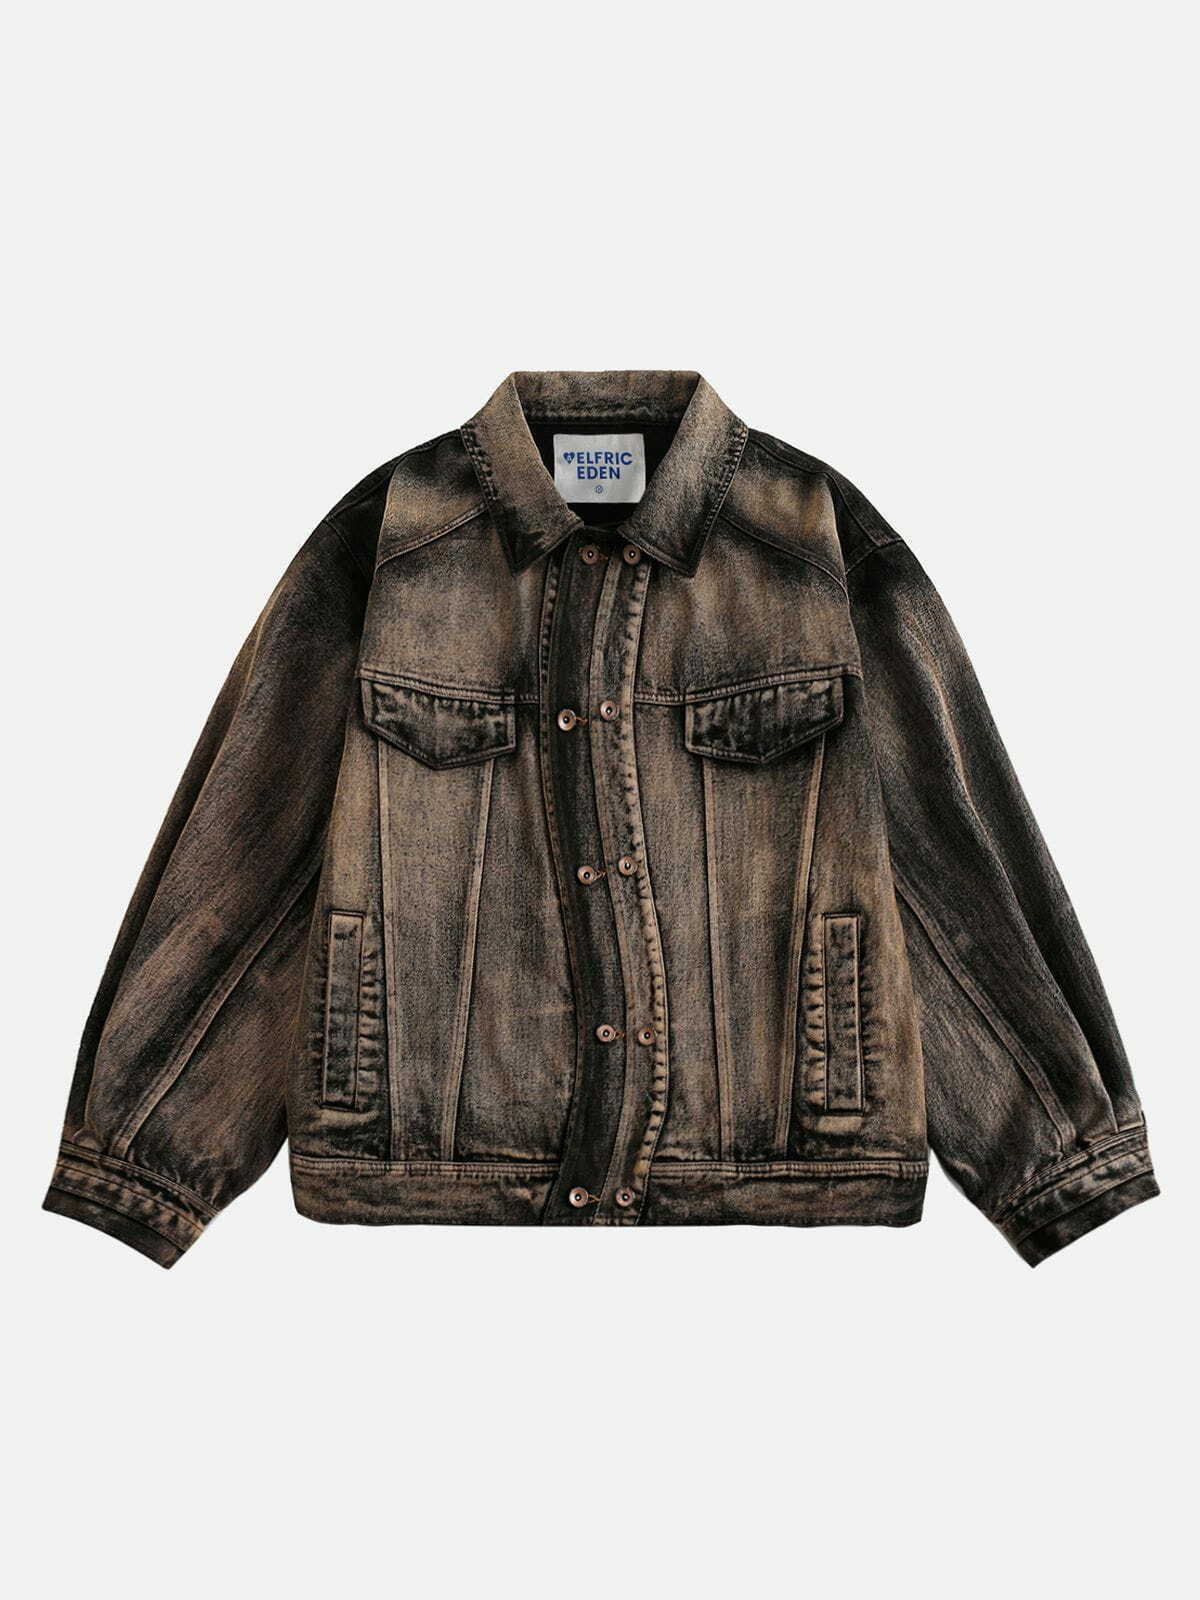 exclusive denim jacket special design & urban flair 8565